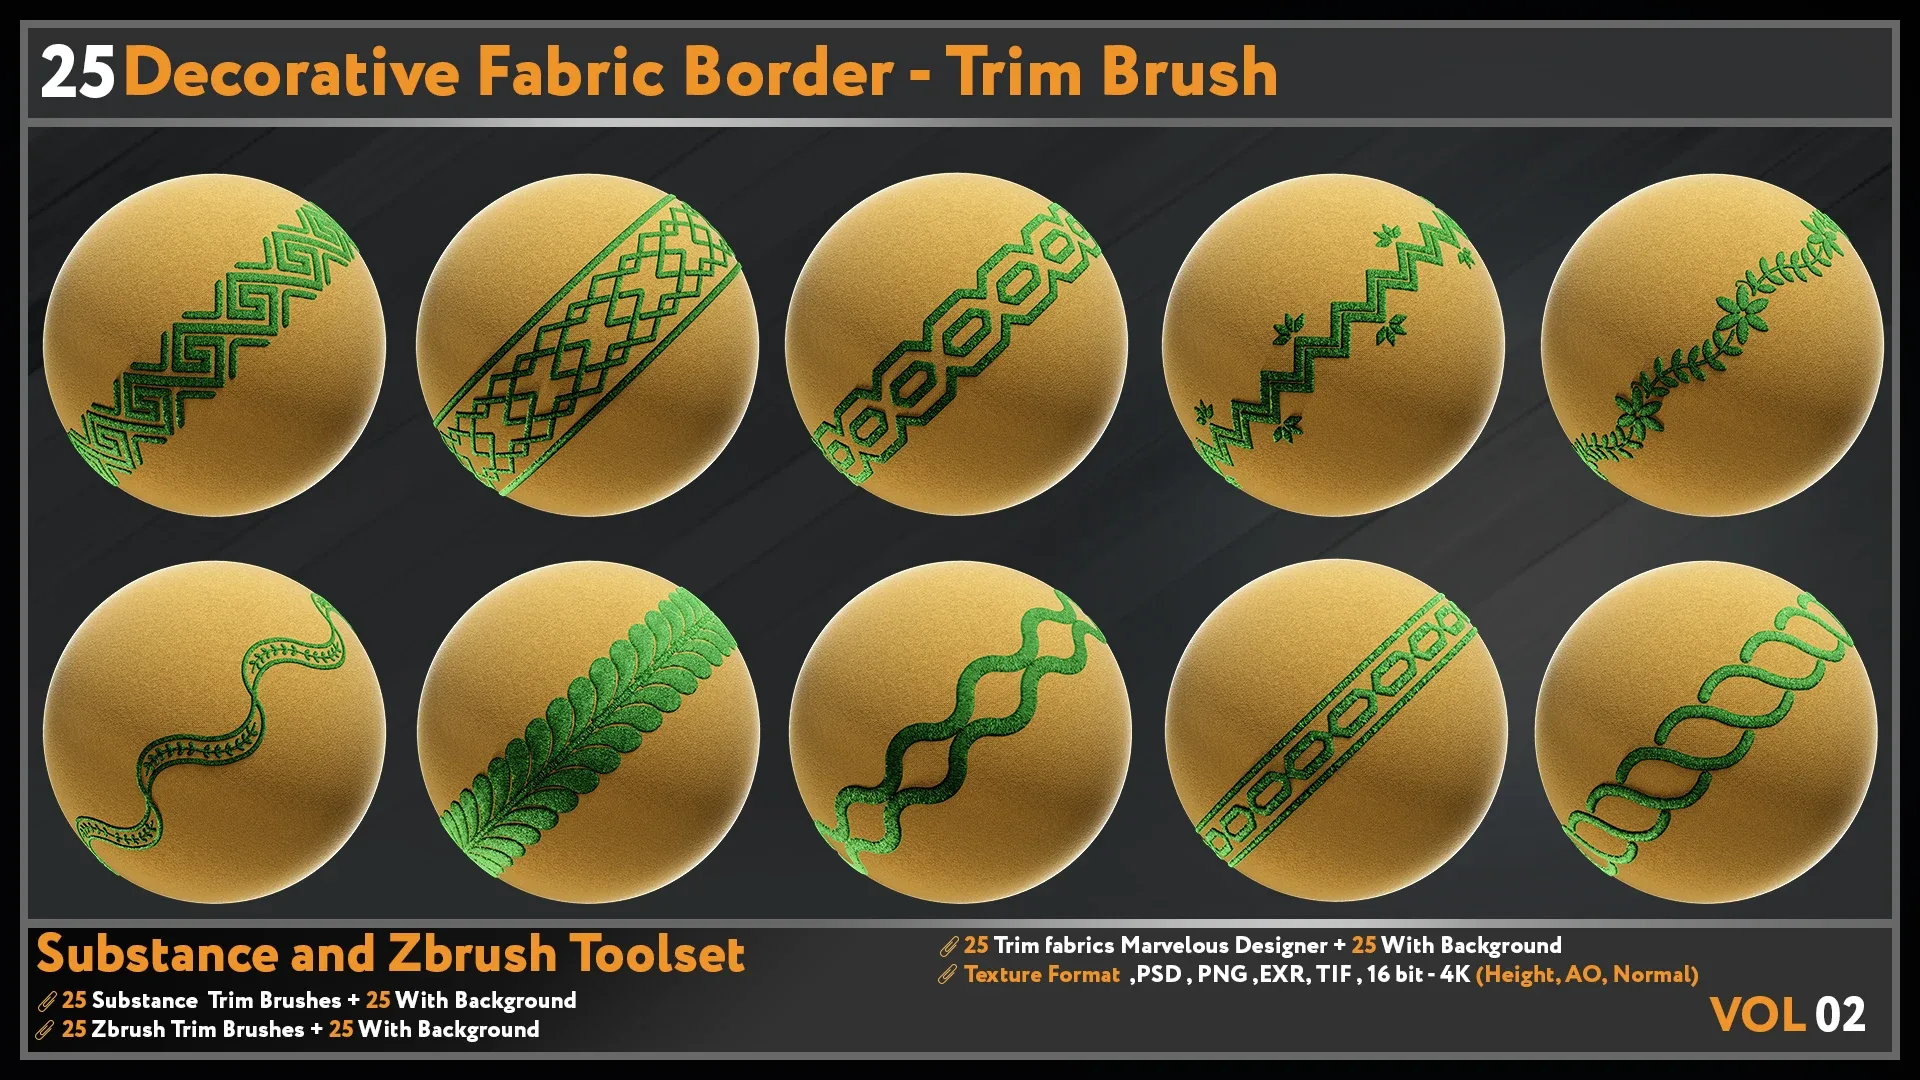 25 Decorative Fabric Border - Trim Brush-VOL 02